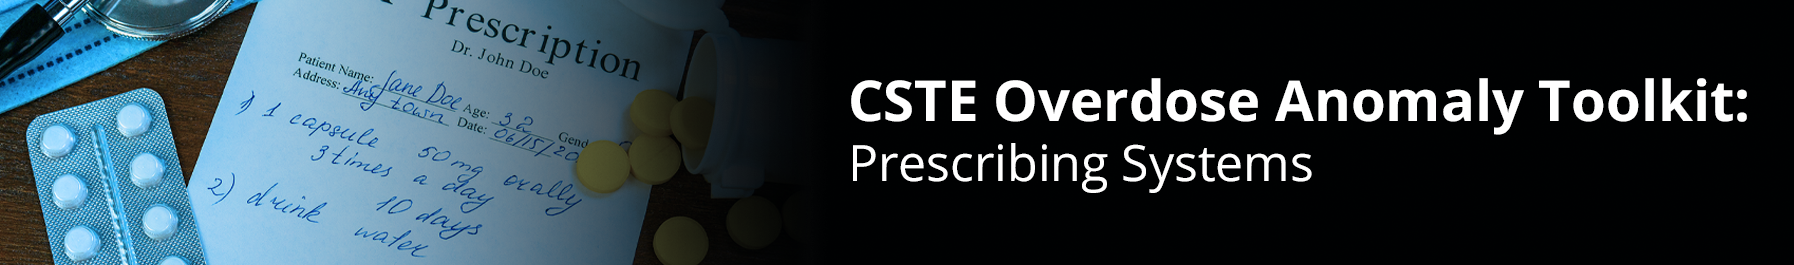 CSTE Overdose Anomaly Toolkit: Prescribing Systems